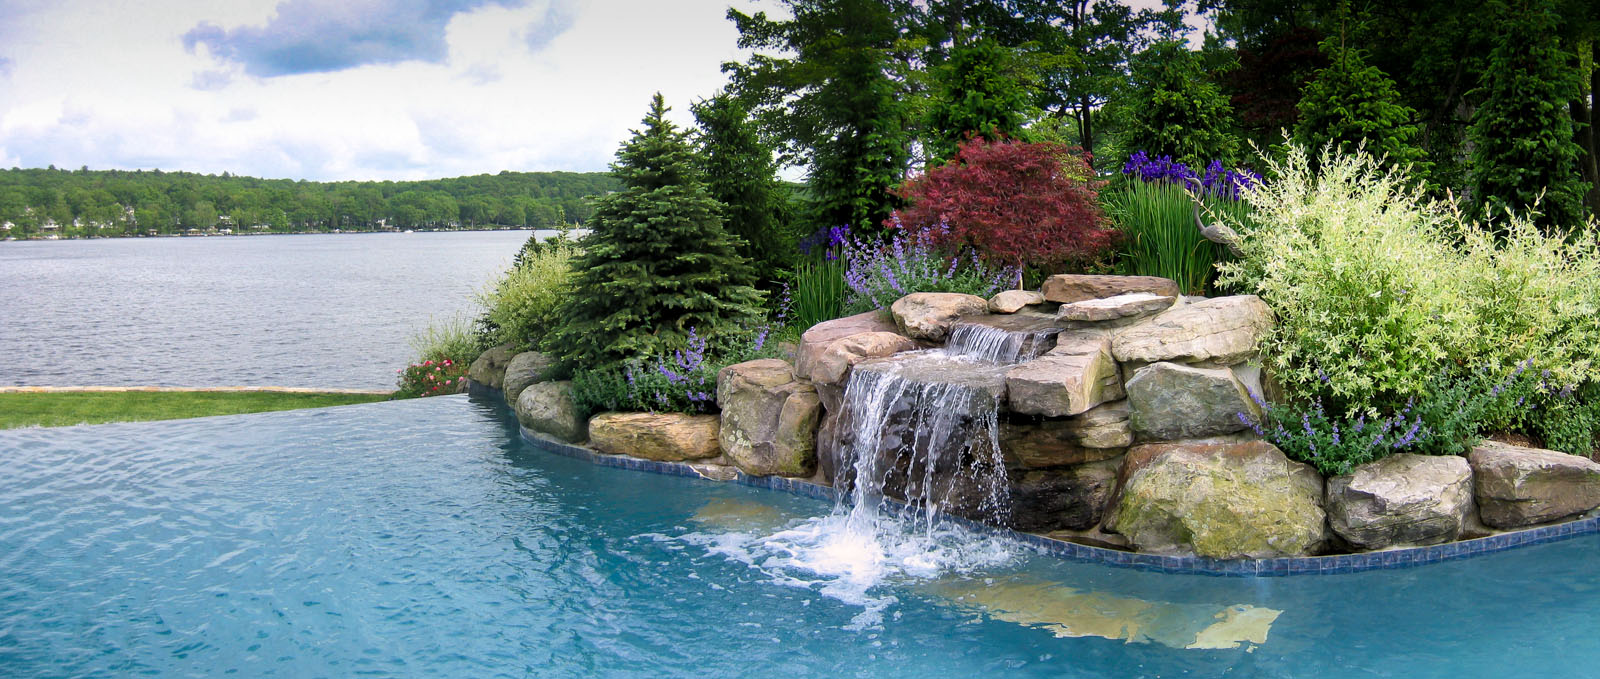 swimming pool landscape plantings around pool waterfall